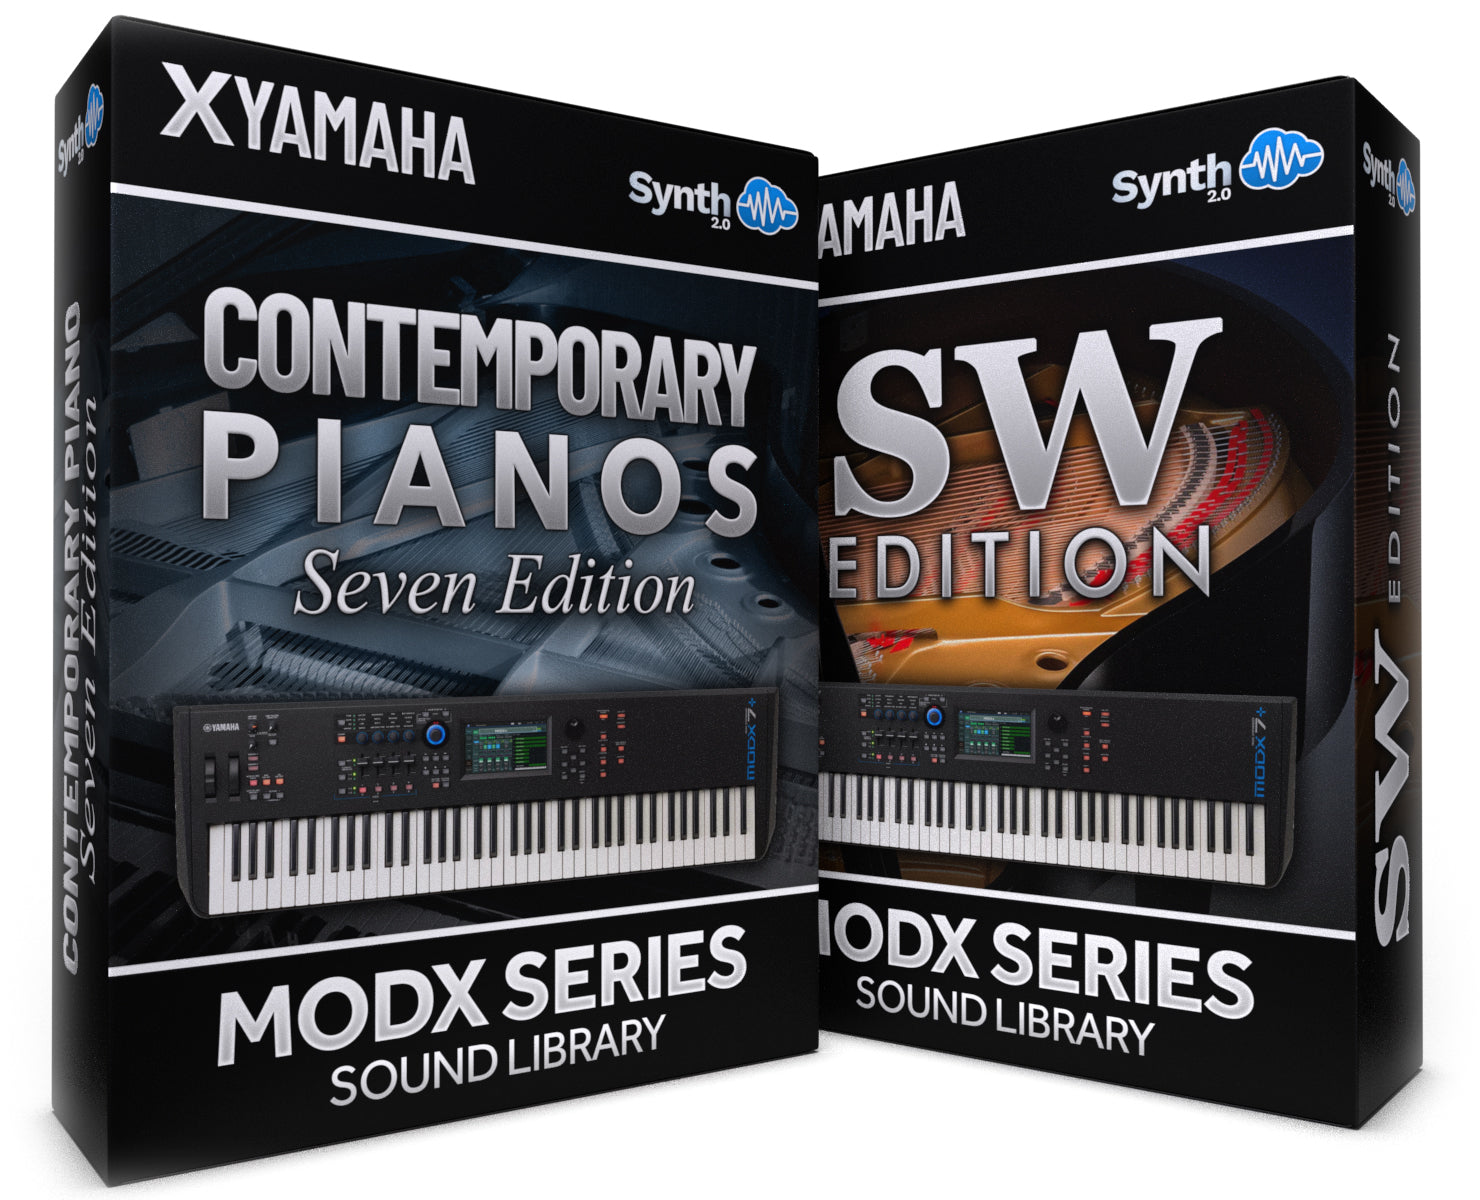 DRS030 - ( Bundle ) - Contemporary Pianos Seven Edition + SW Edition - Yamaha MODX / MODX+